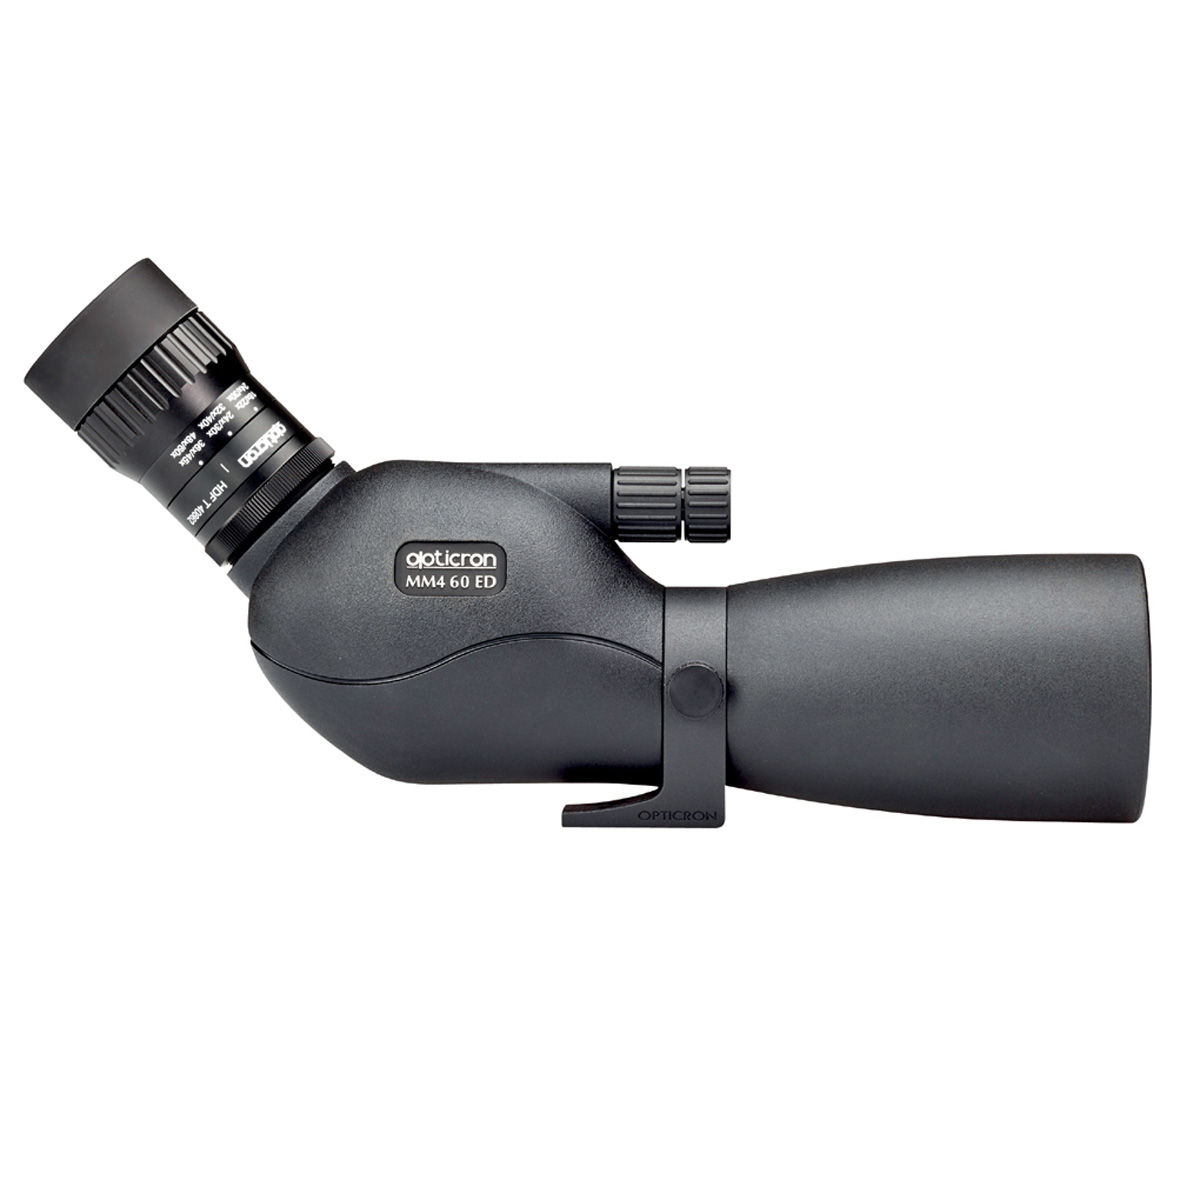 Opticron MM4 60 GA ED Travelscope plus HDF T Zoom Eyepiece